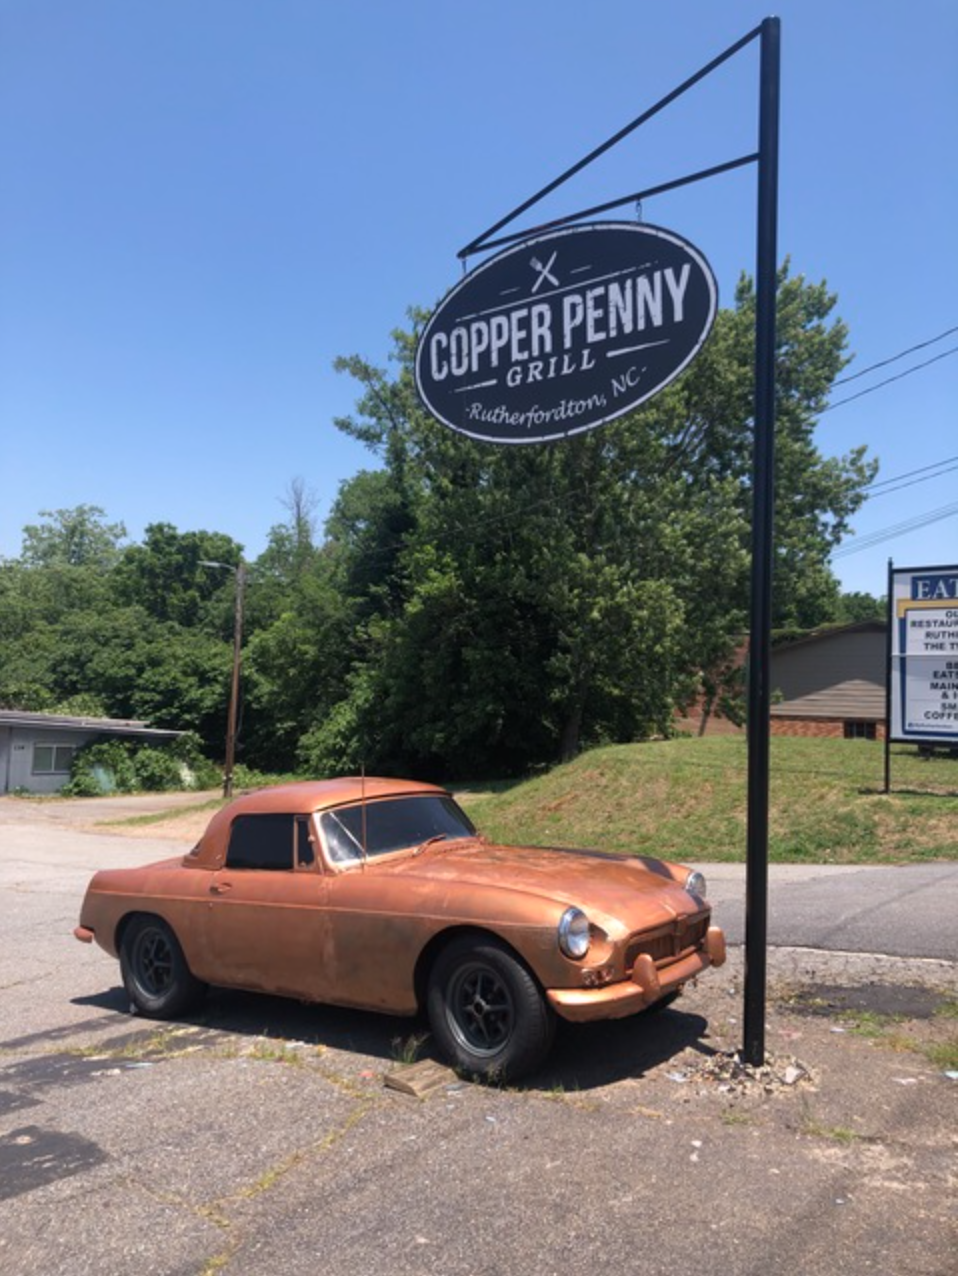 Copper Penny Grill - Rutherfordton, North Carolina (Copy)